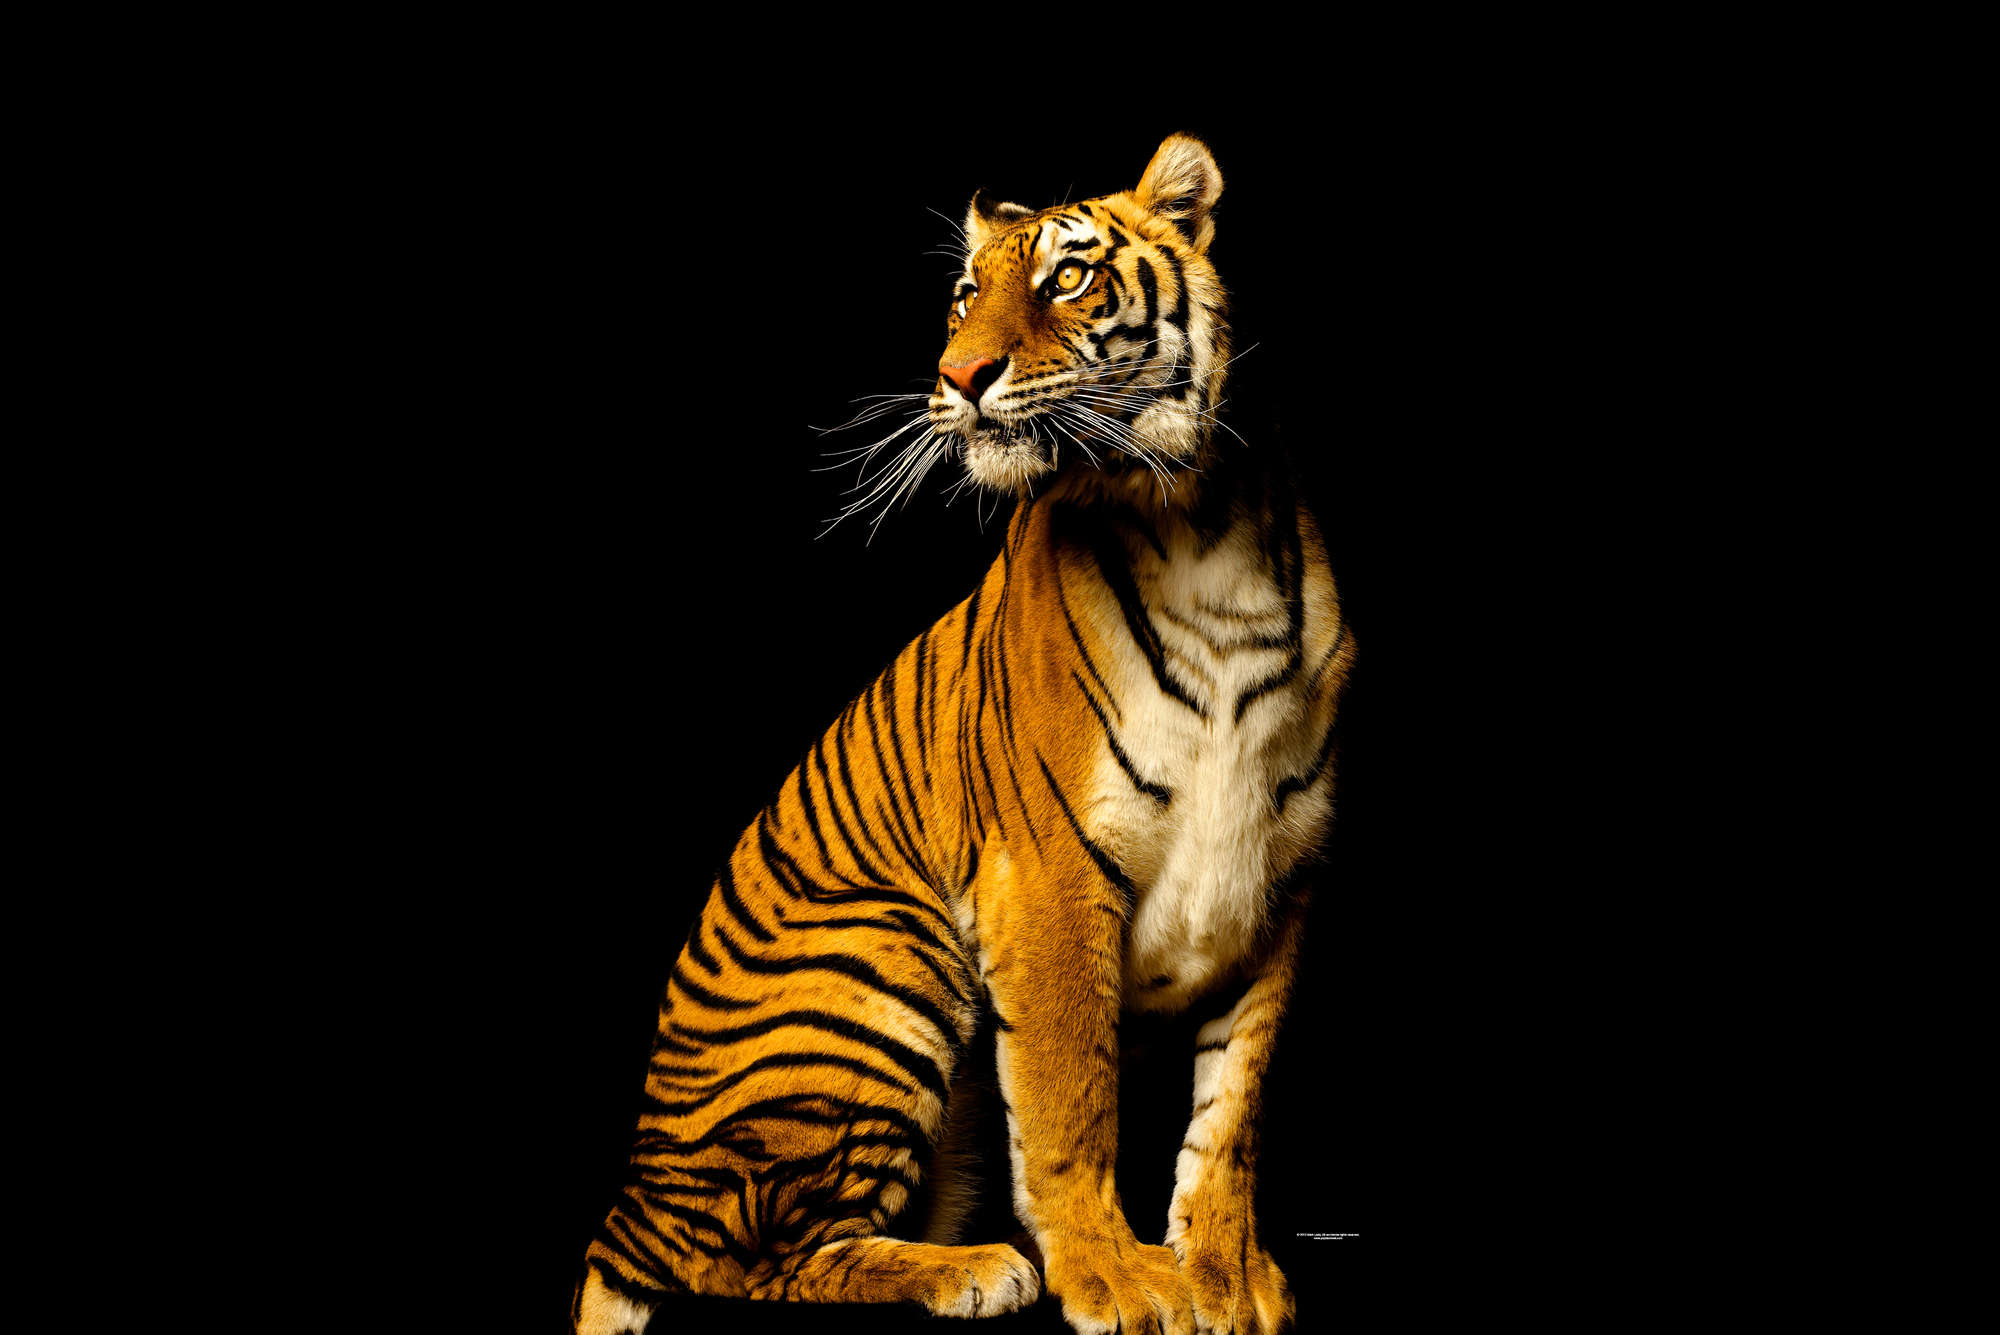             Tiger sitting - animal portrait mural
        